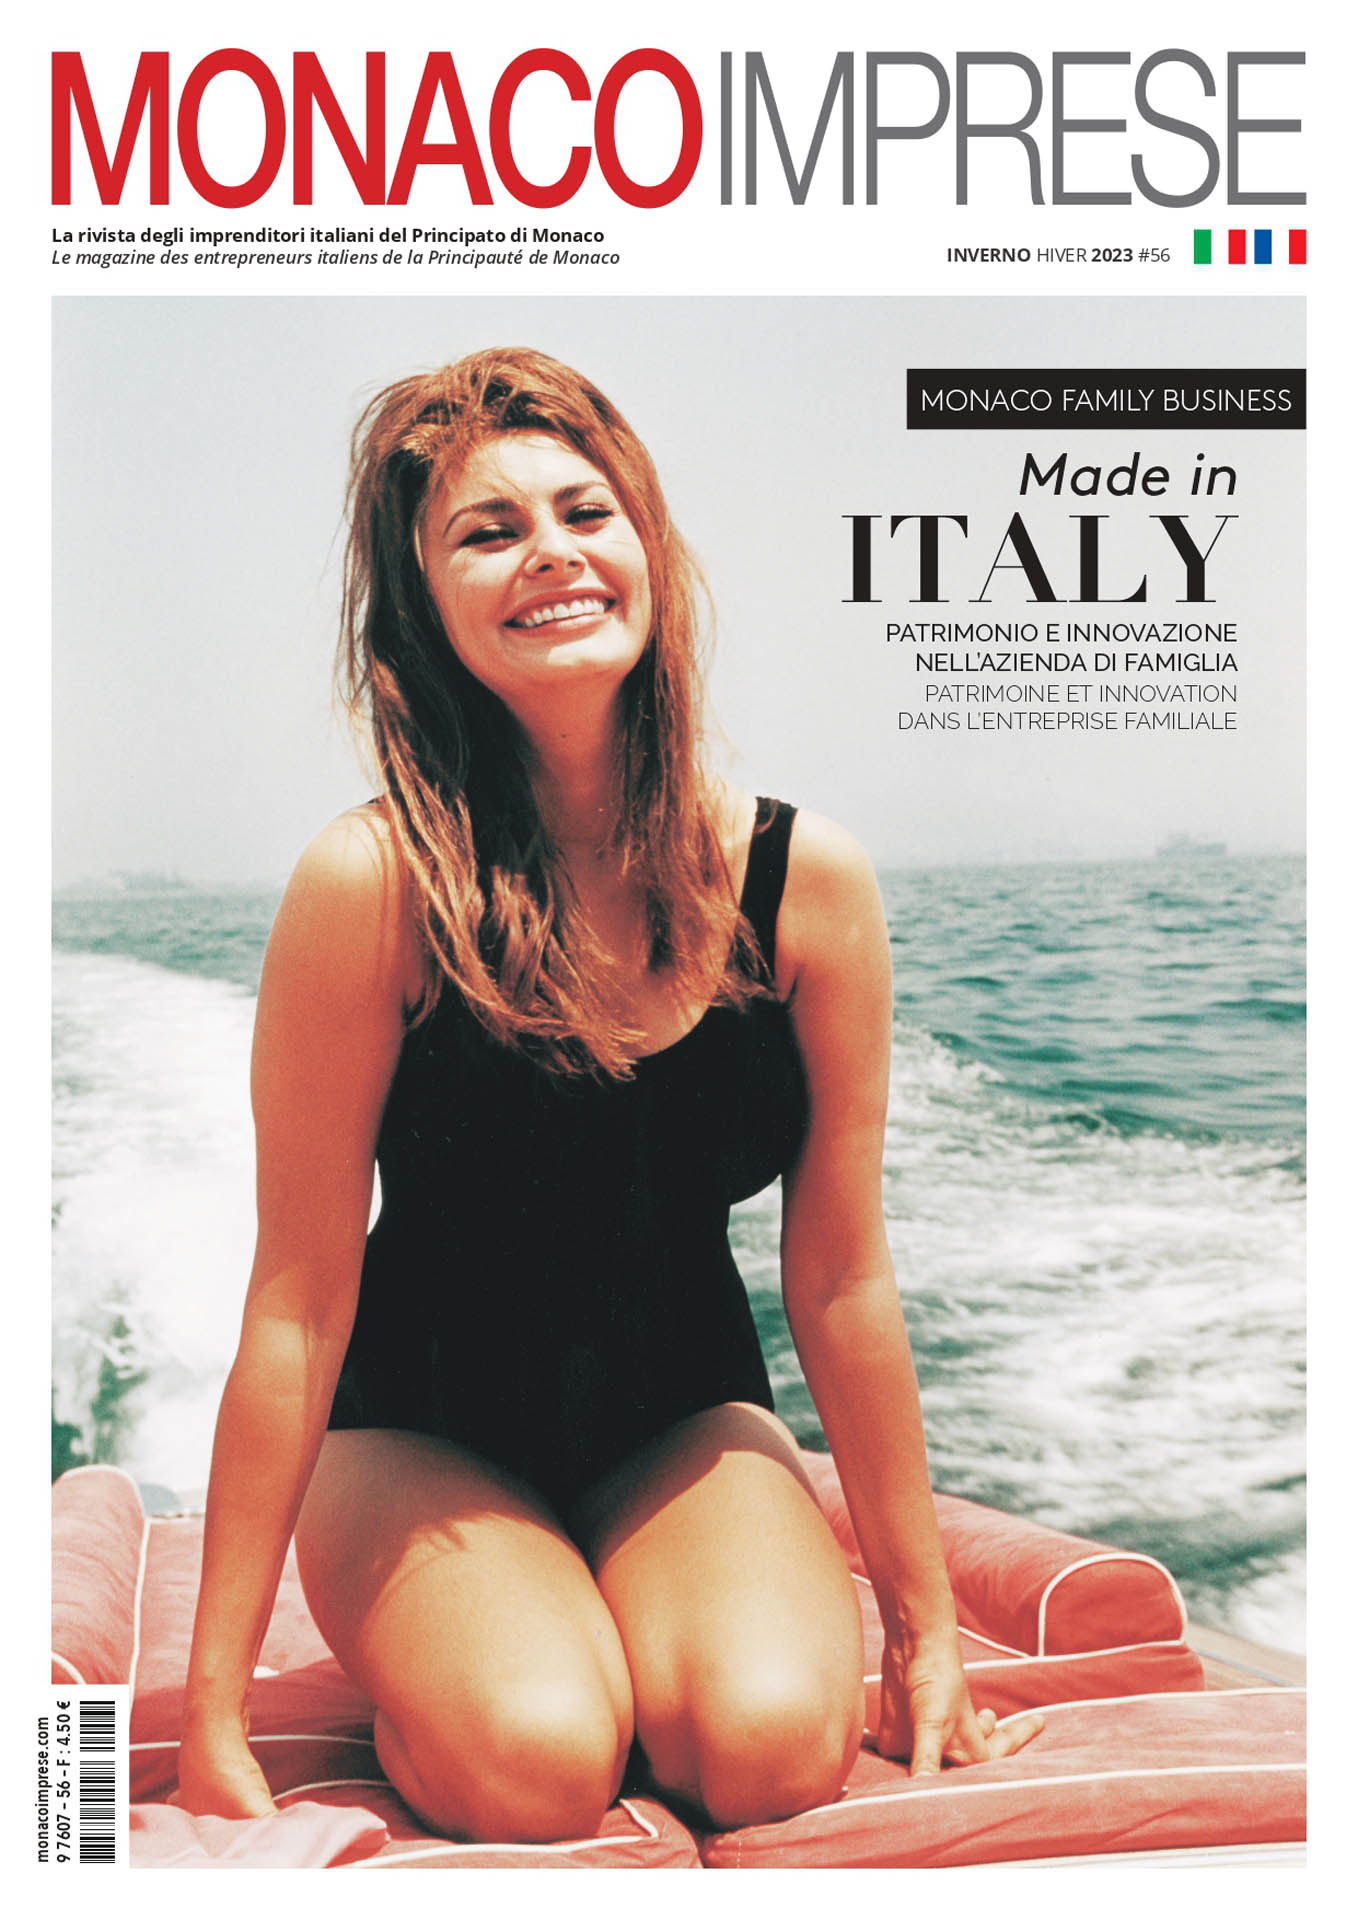 RIVA magazine Monaco Imprese 56_pages-to-jpg-0001